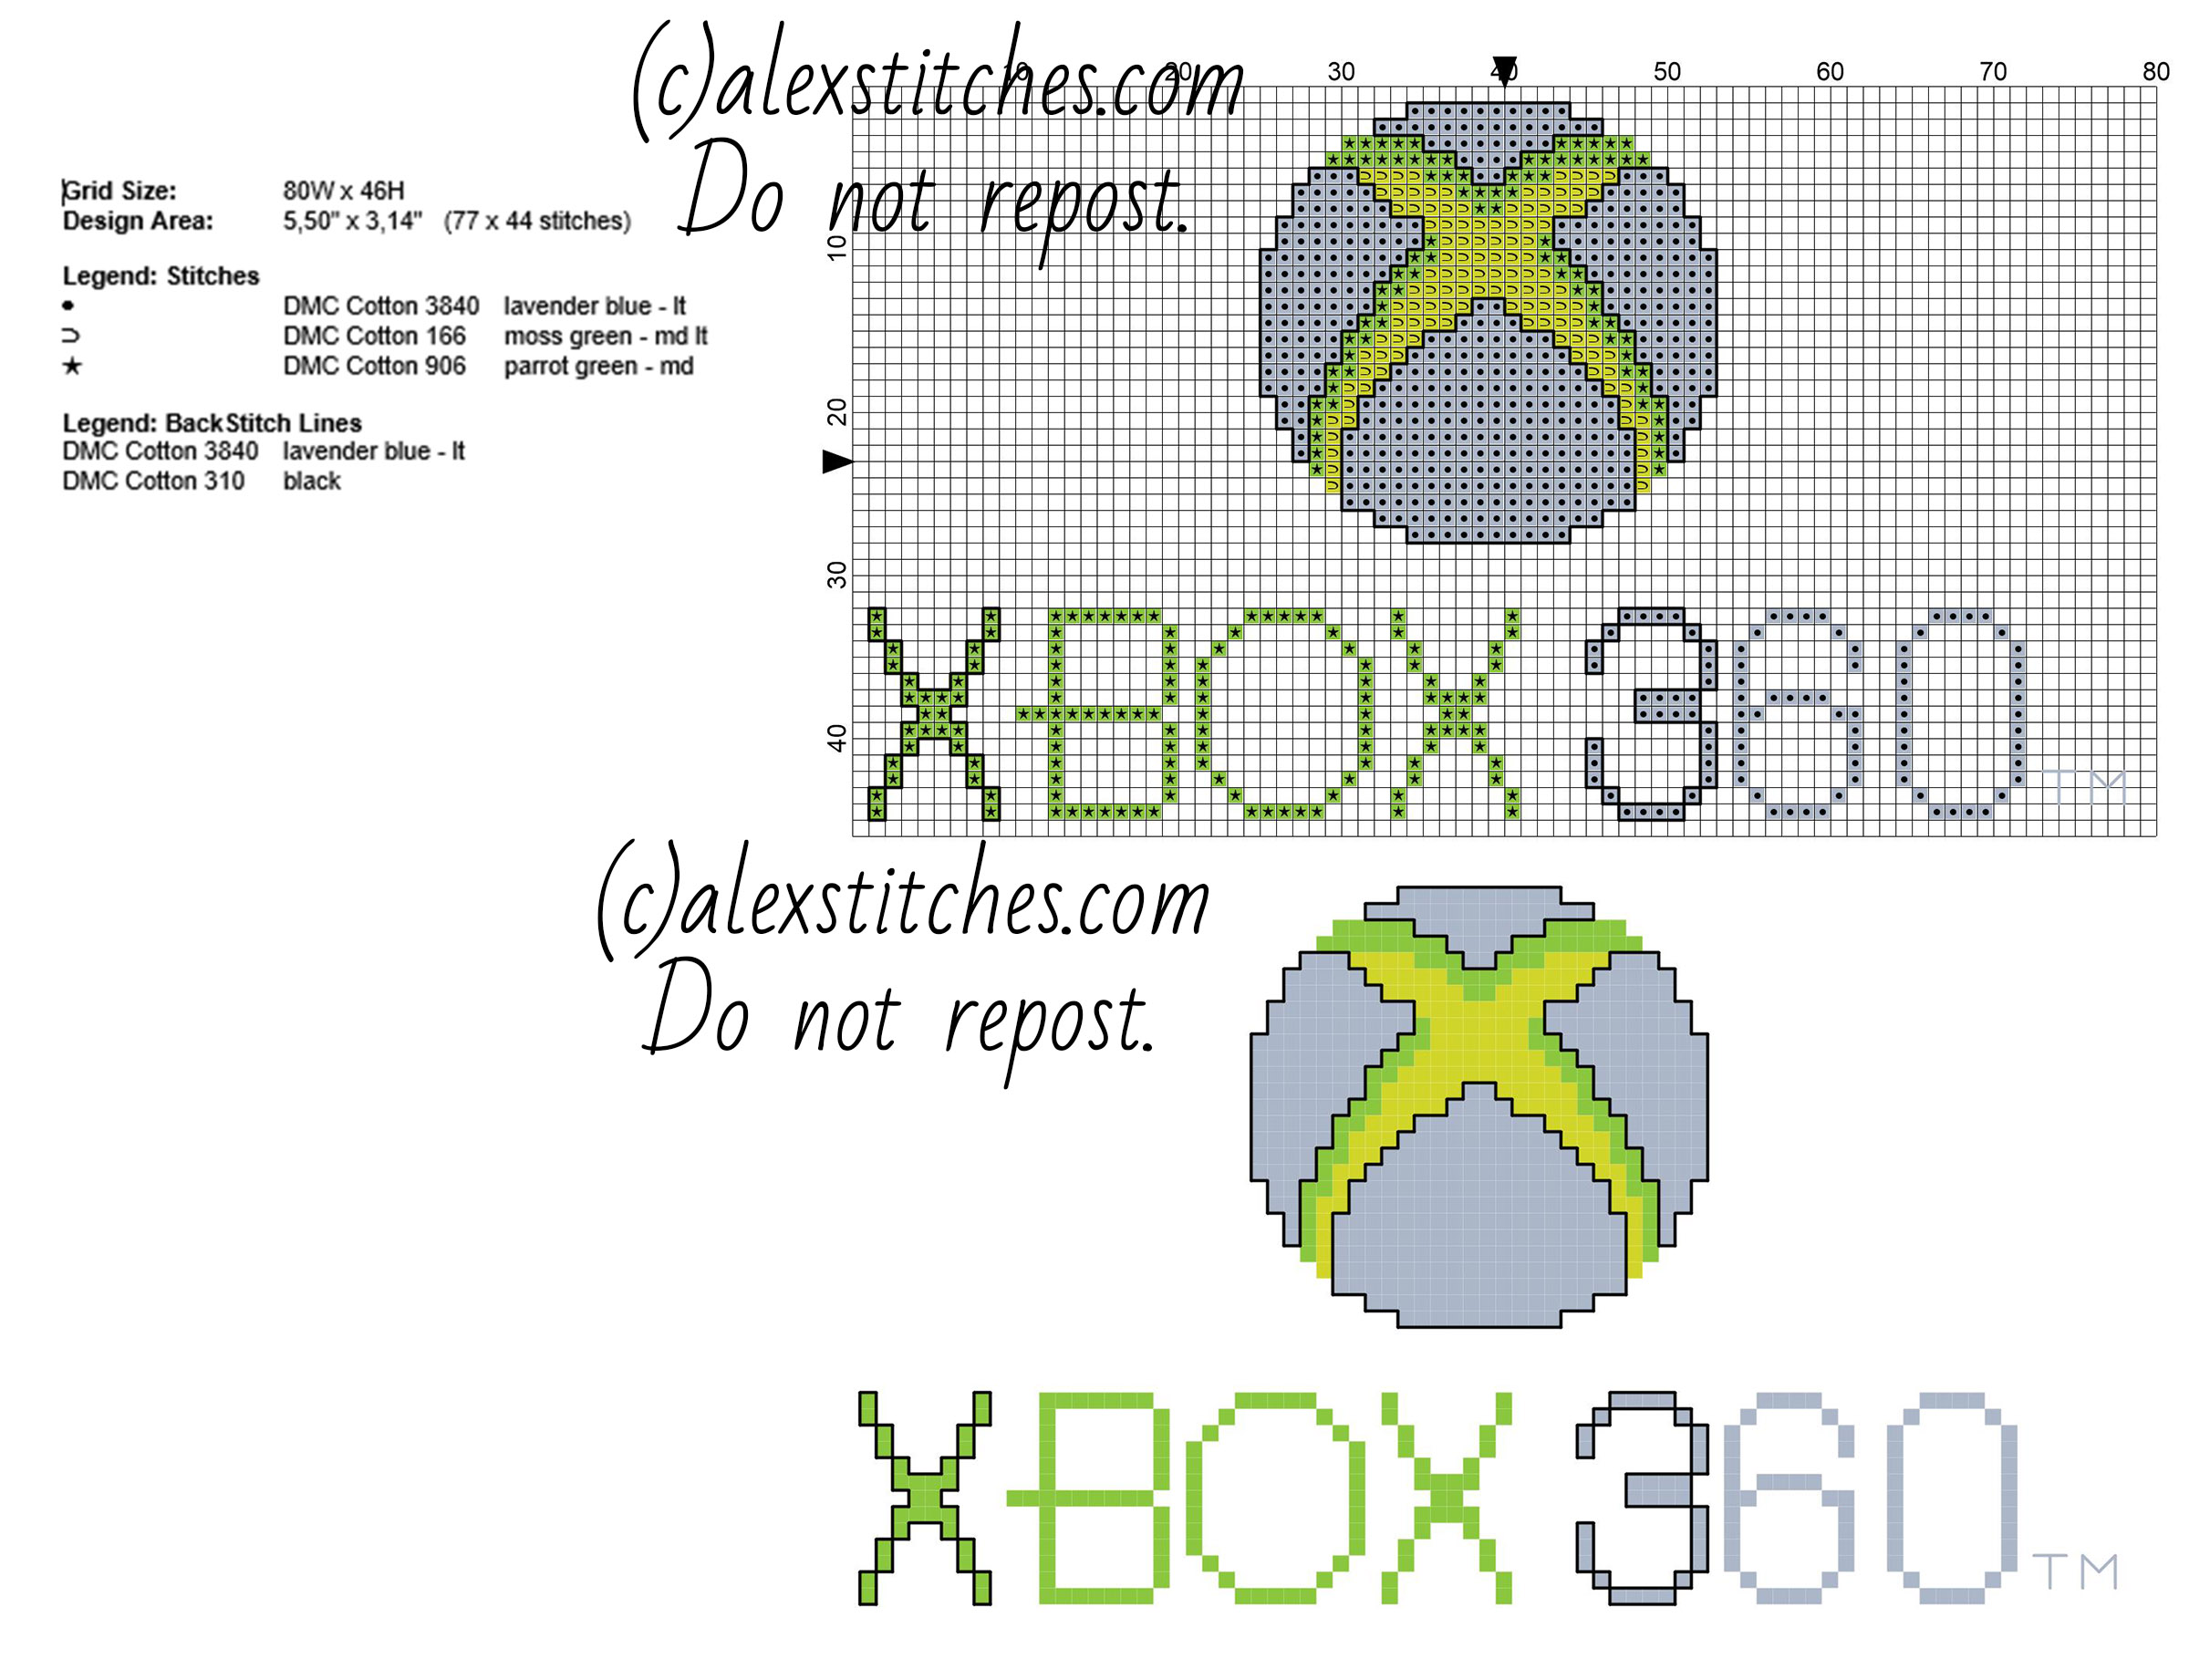 Xbox 360 logo Microsoft videogames console free cross stitch pattern 77 x 44 stitches 4 DMC threads